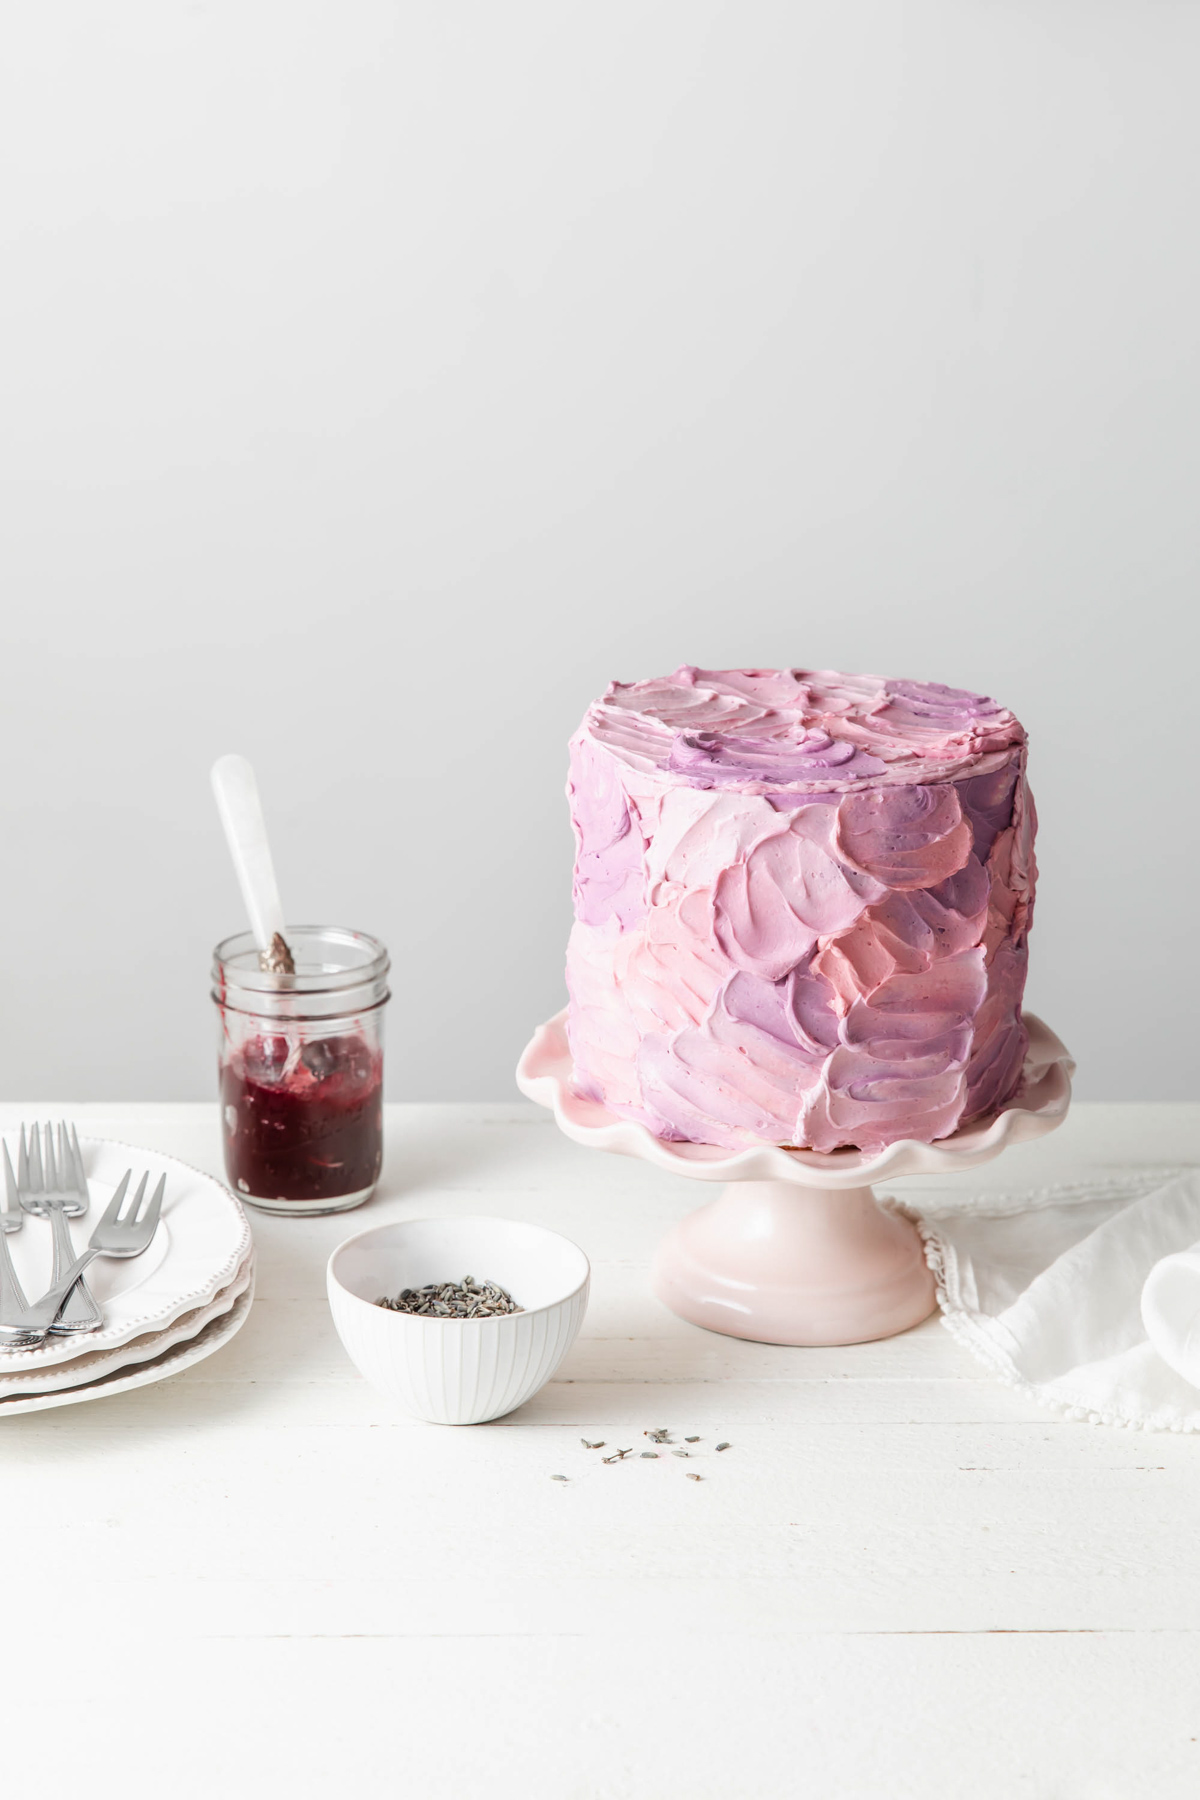 6-layer blackberry lavender cake with swirly purple buttercream